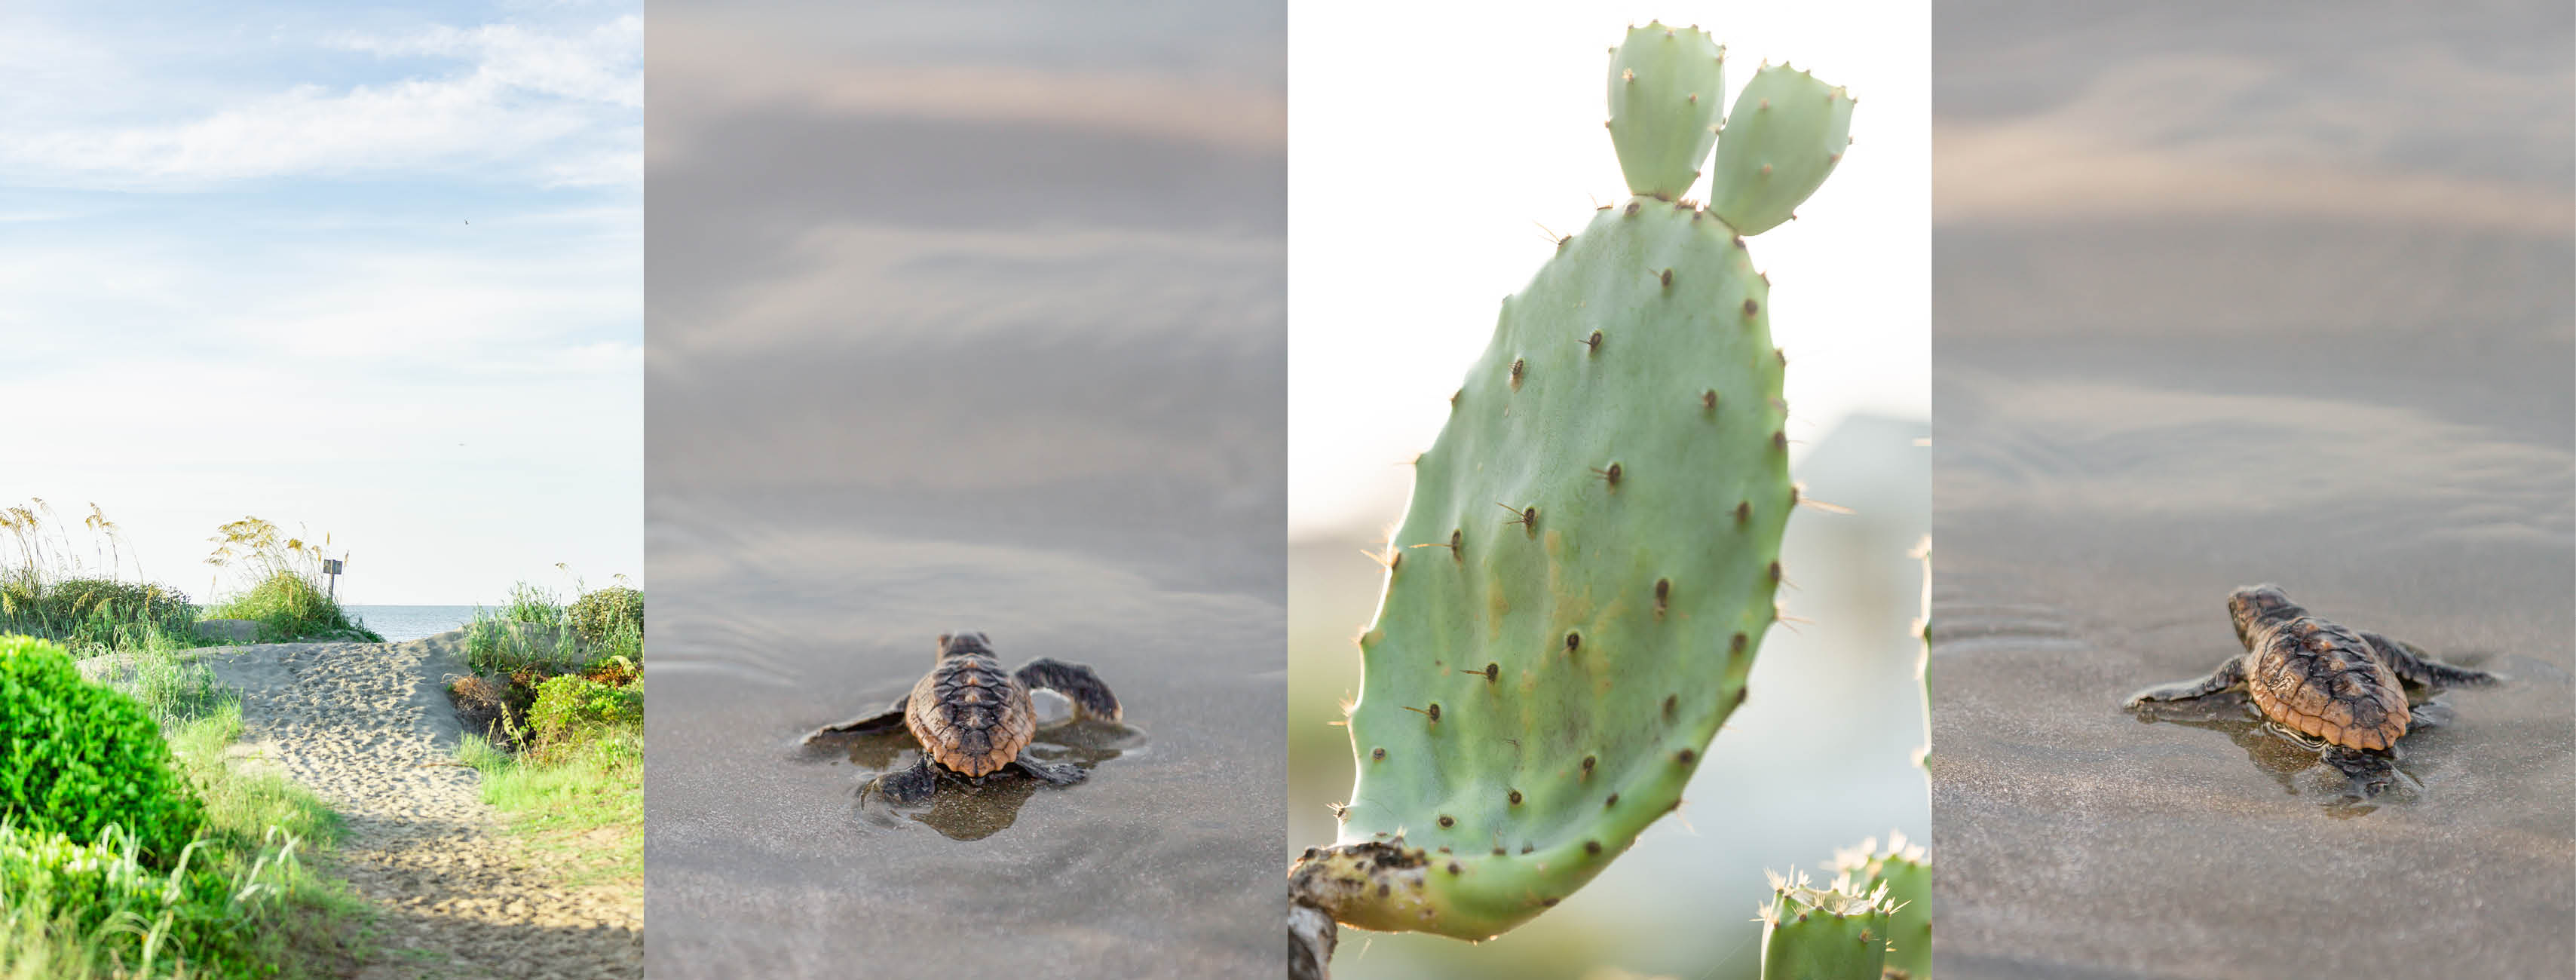 baby turtle, beach, cactus